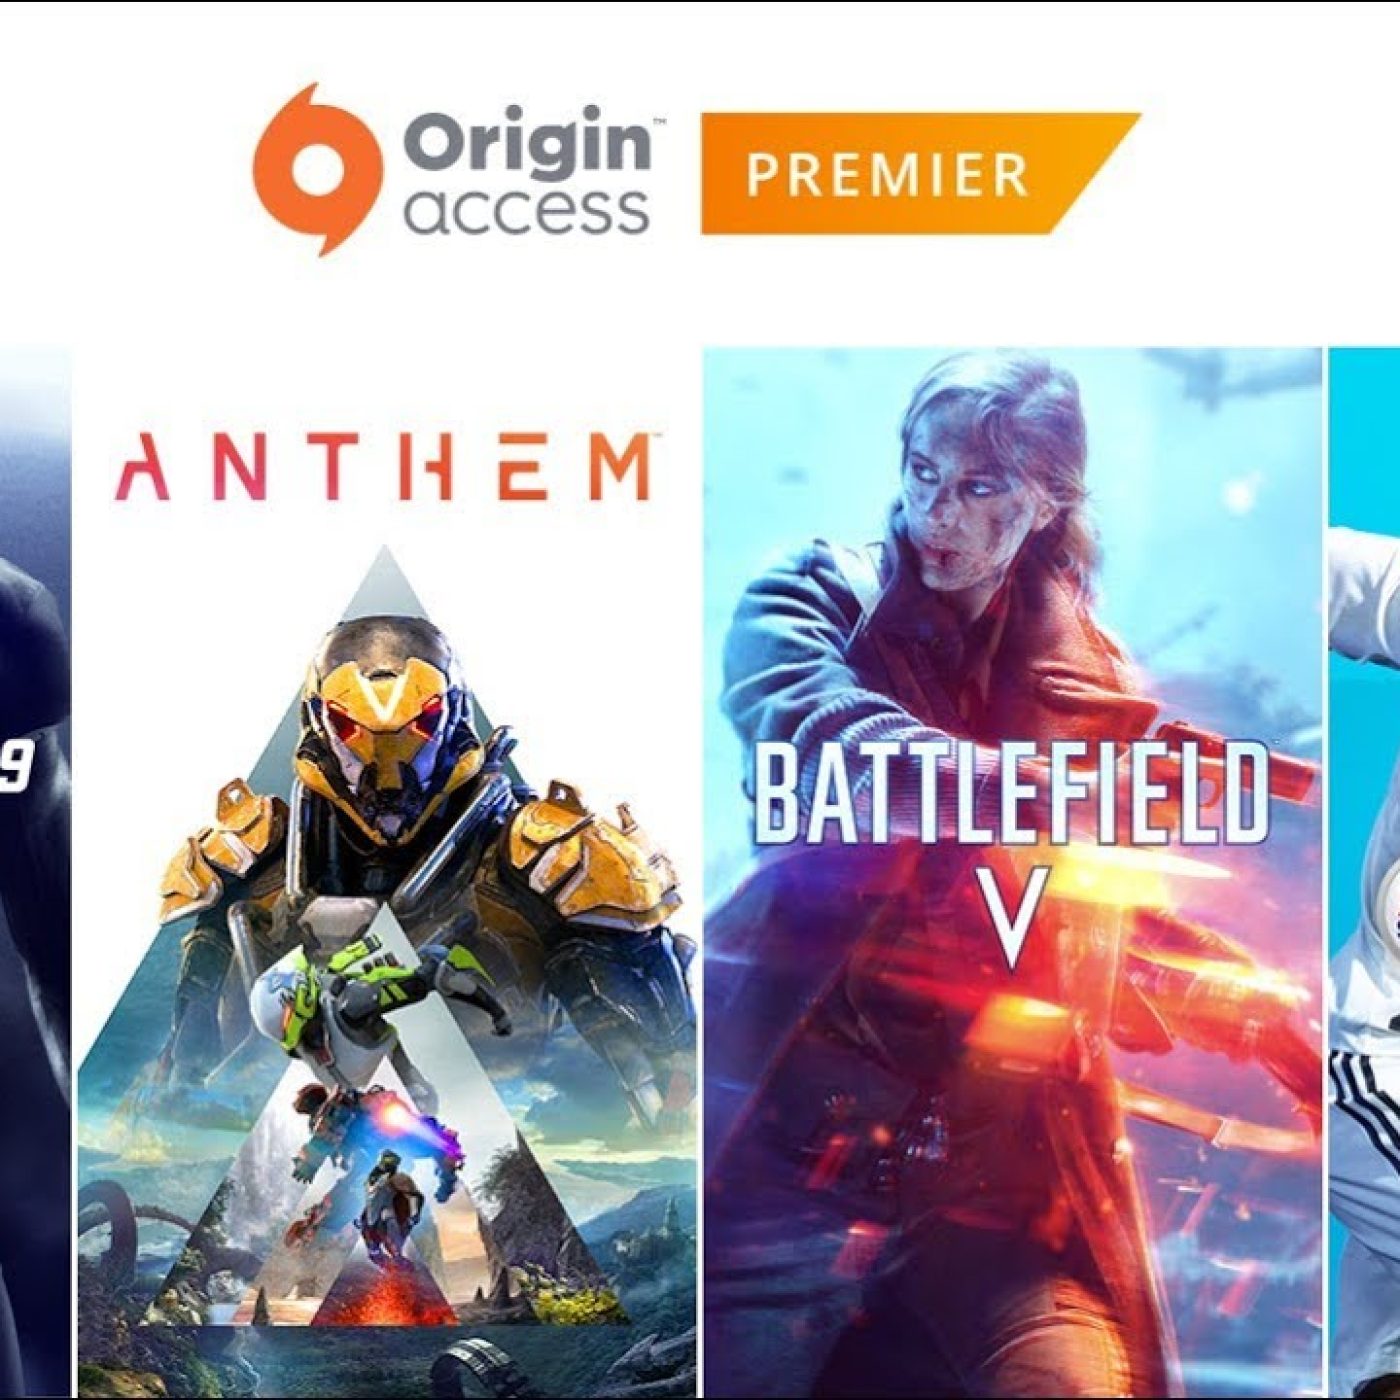 Origin Access Premier is EA's New PC Games Subscription Service